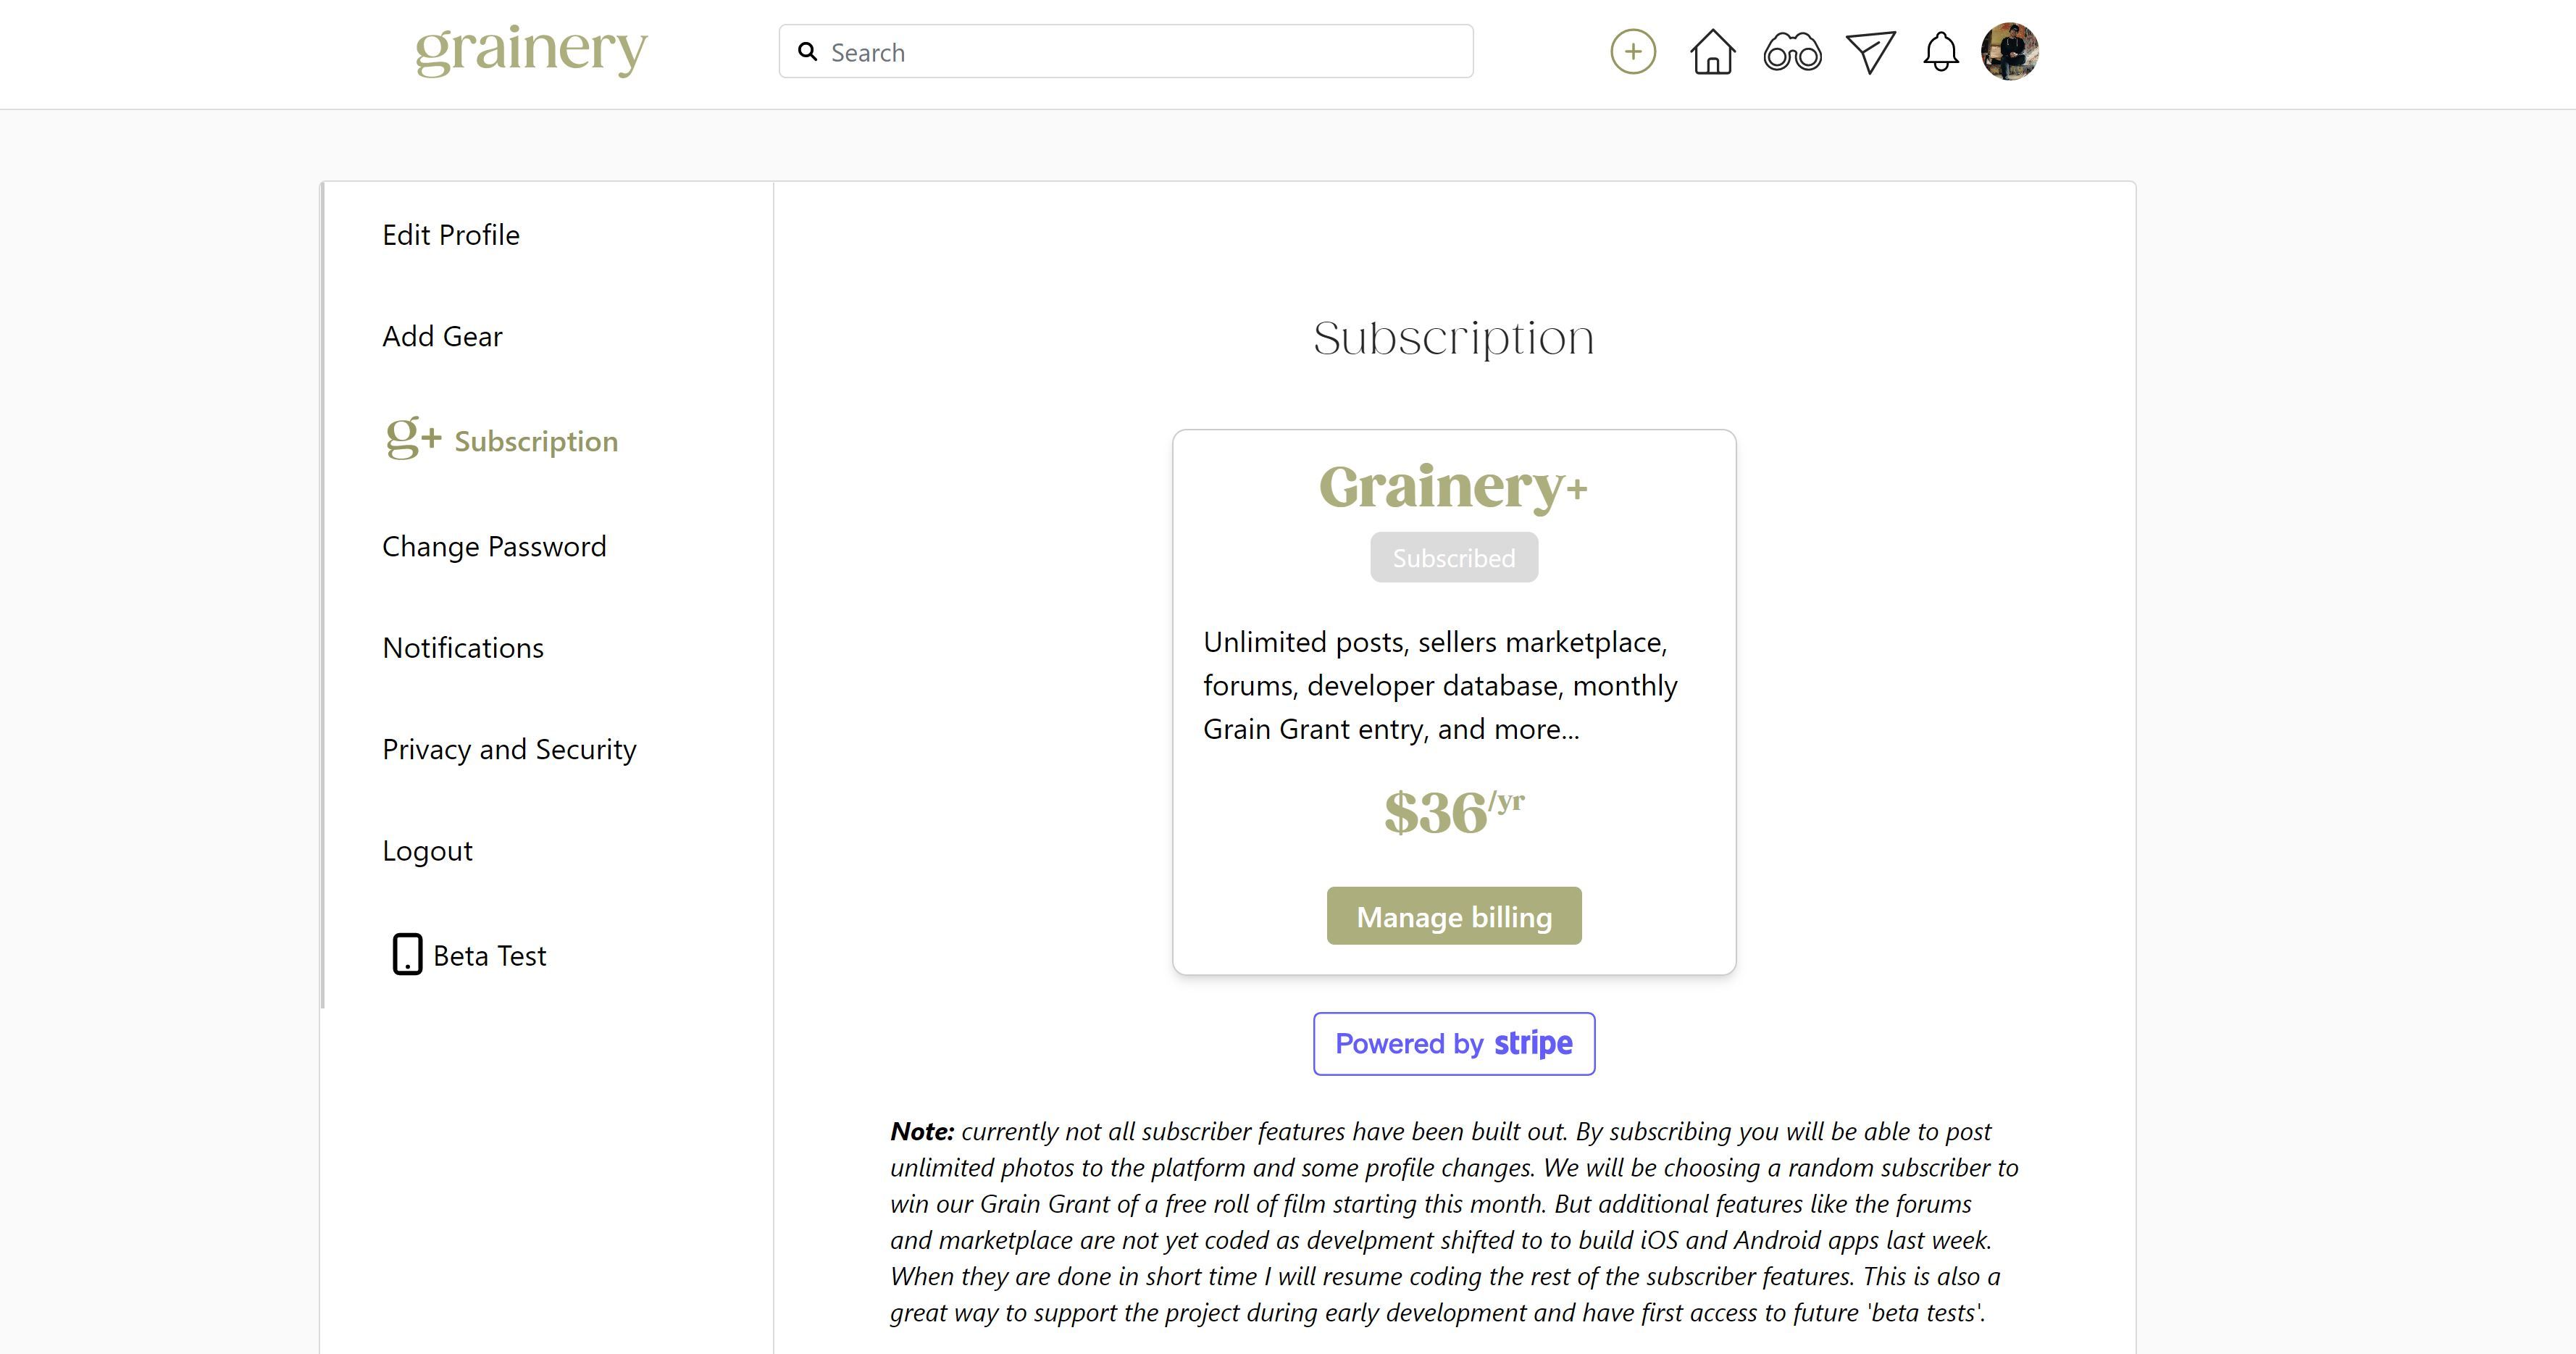 grainery+ plus subscription membership information page in profile settings desktop website